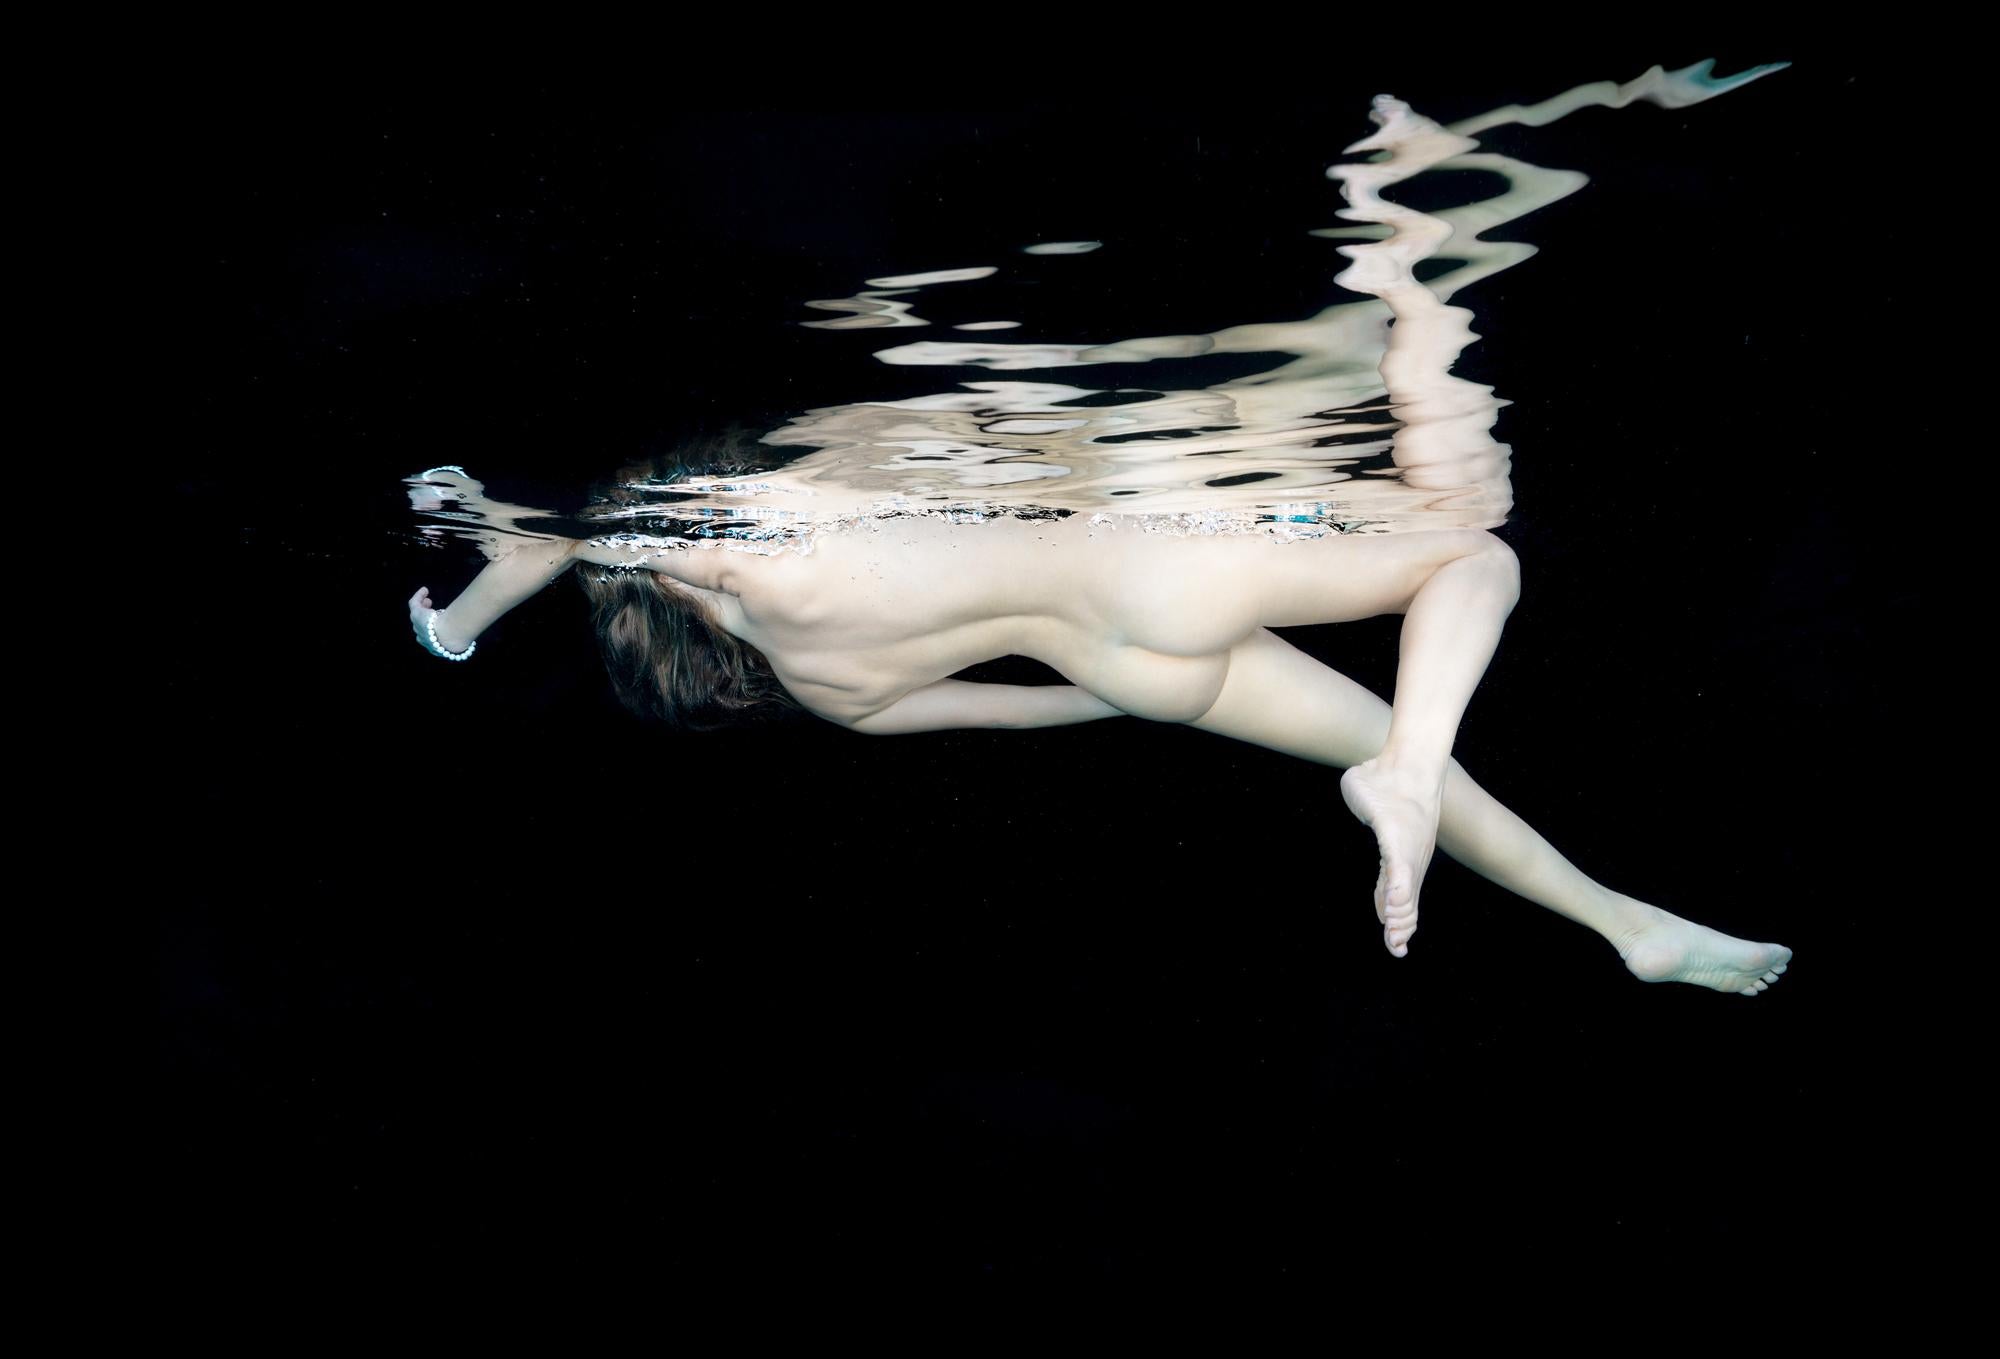 Alex Sher Nude Photograph - Porcelain II  - underwater nude photograph - archival pigment print 23x35"